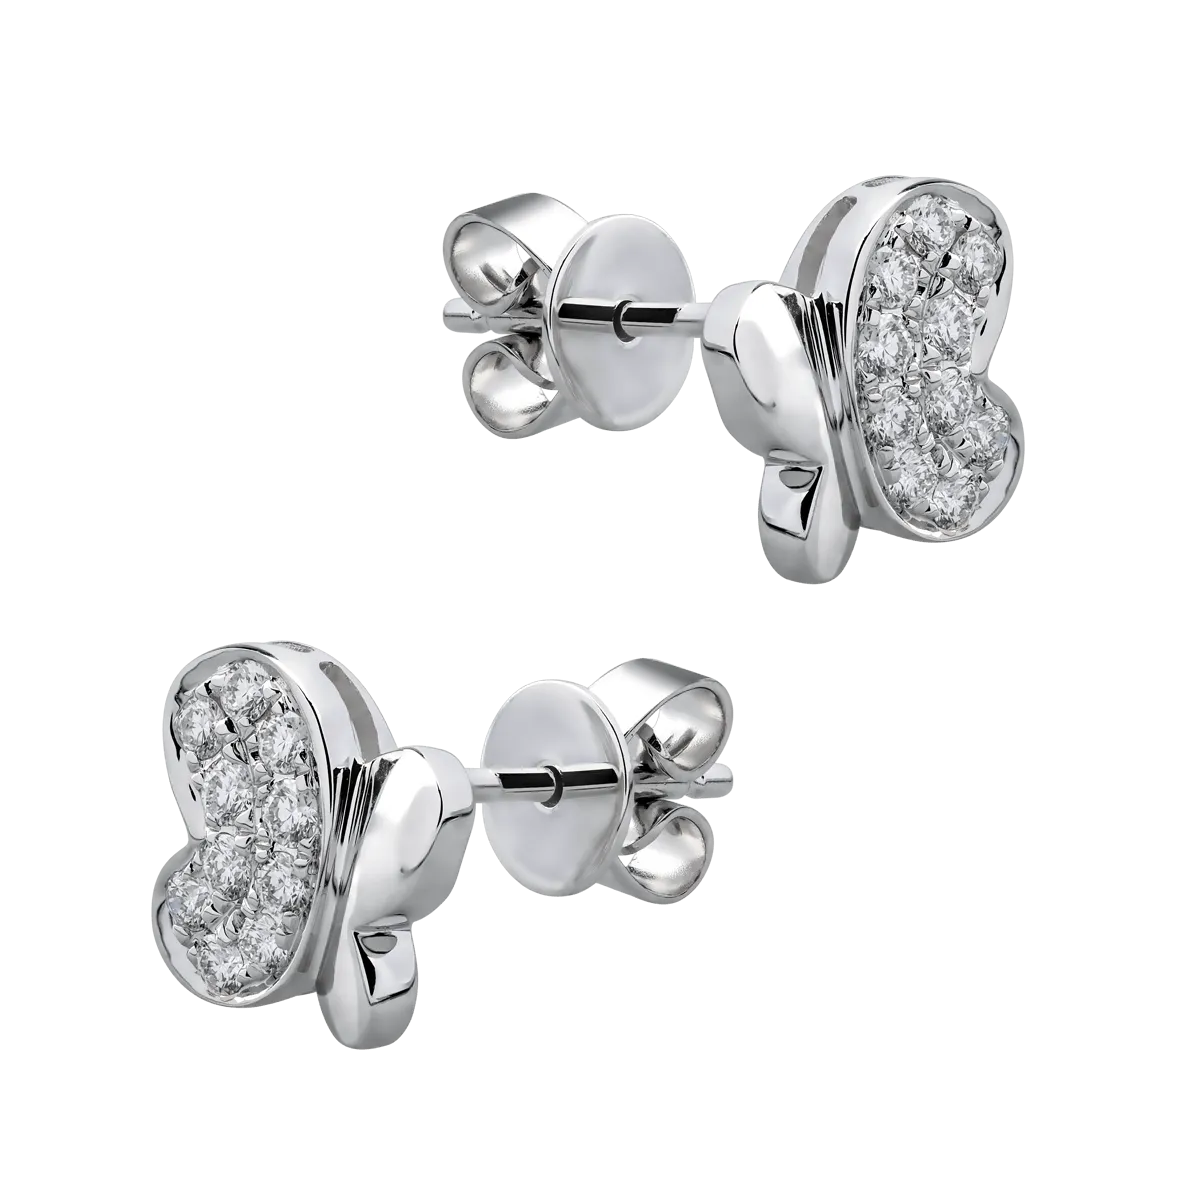 14K white gold butterflies earrings with 0.26ct diamonds